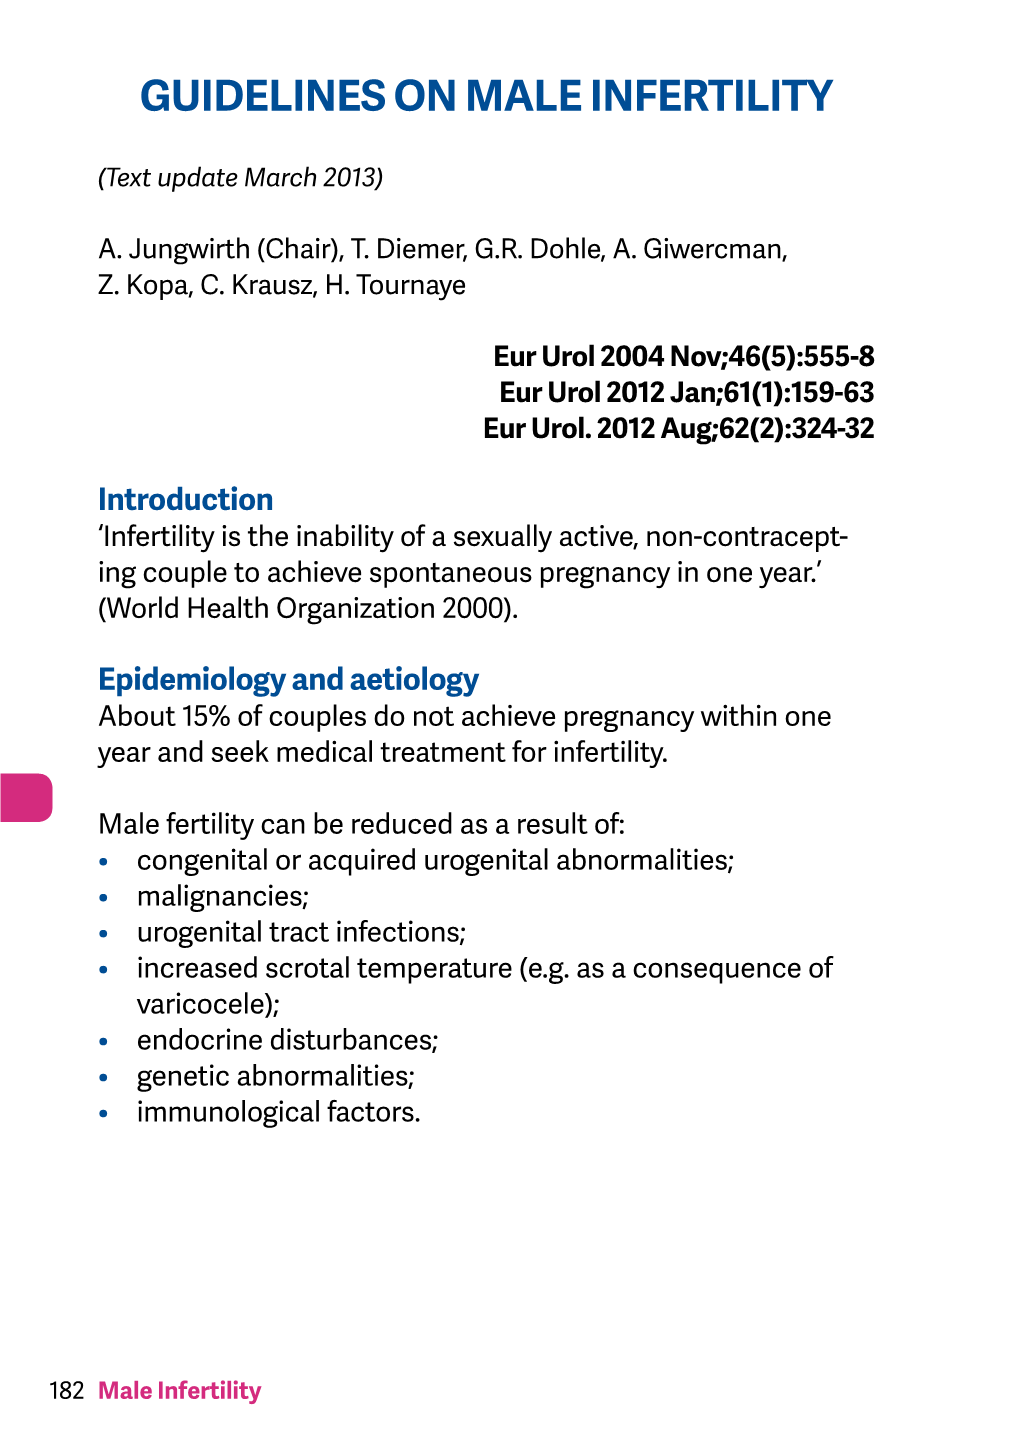 Guidelines on Male Infertility